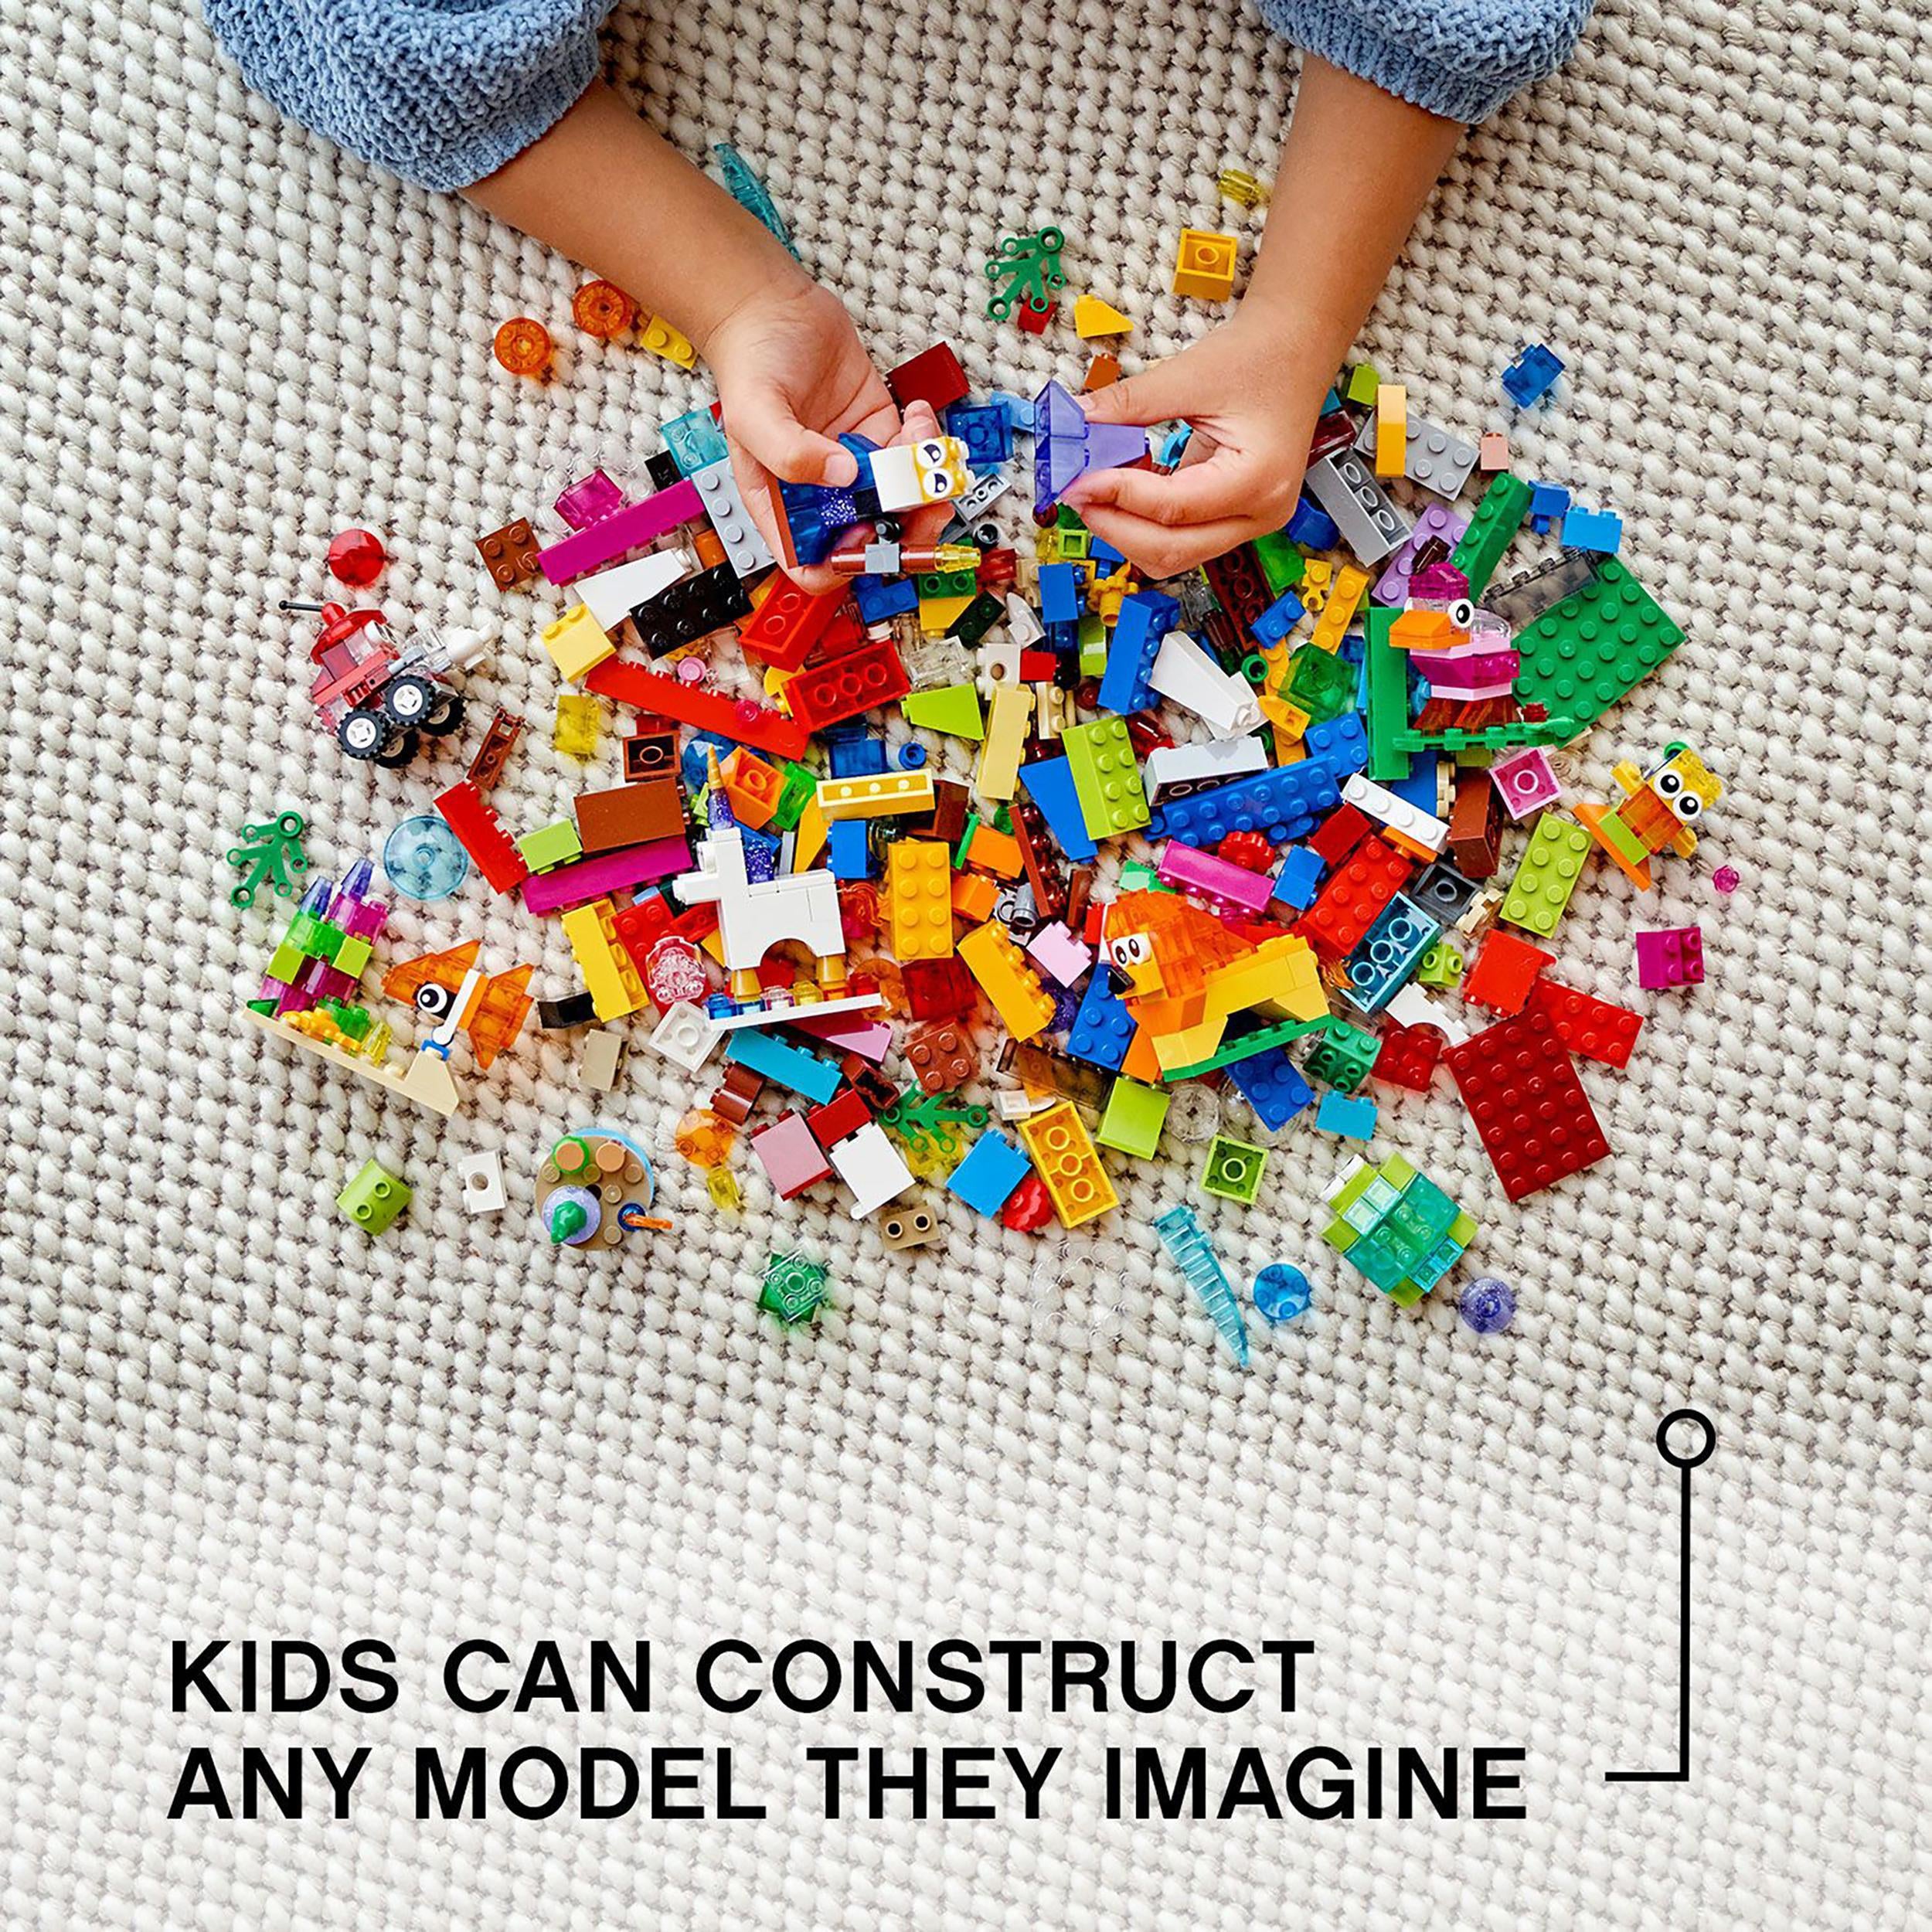 LEGO 11013 Classic Creative Transparent Bricks Building Set with Animals for Kids 4